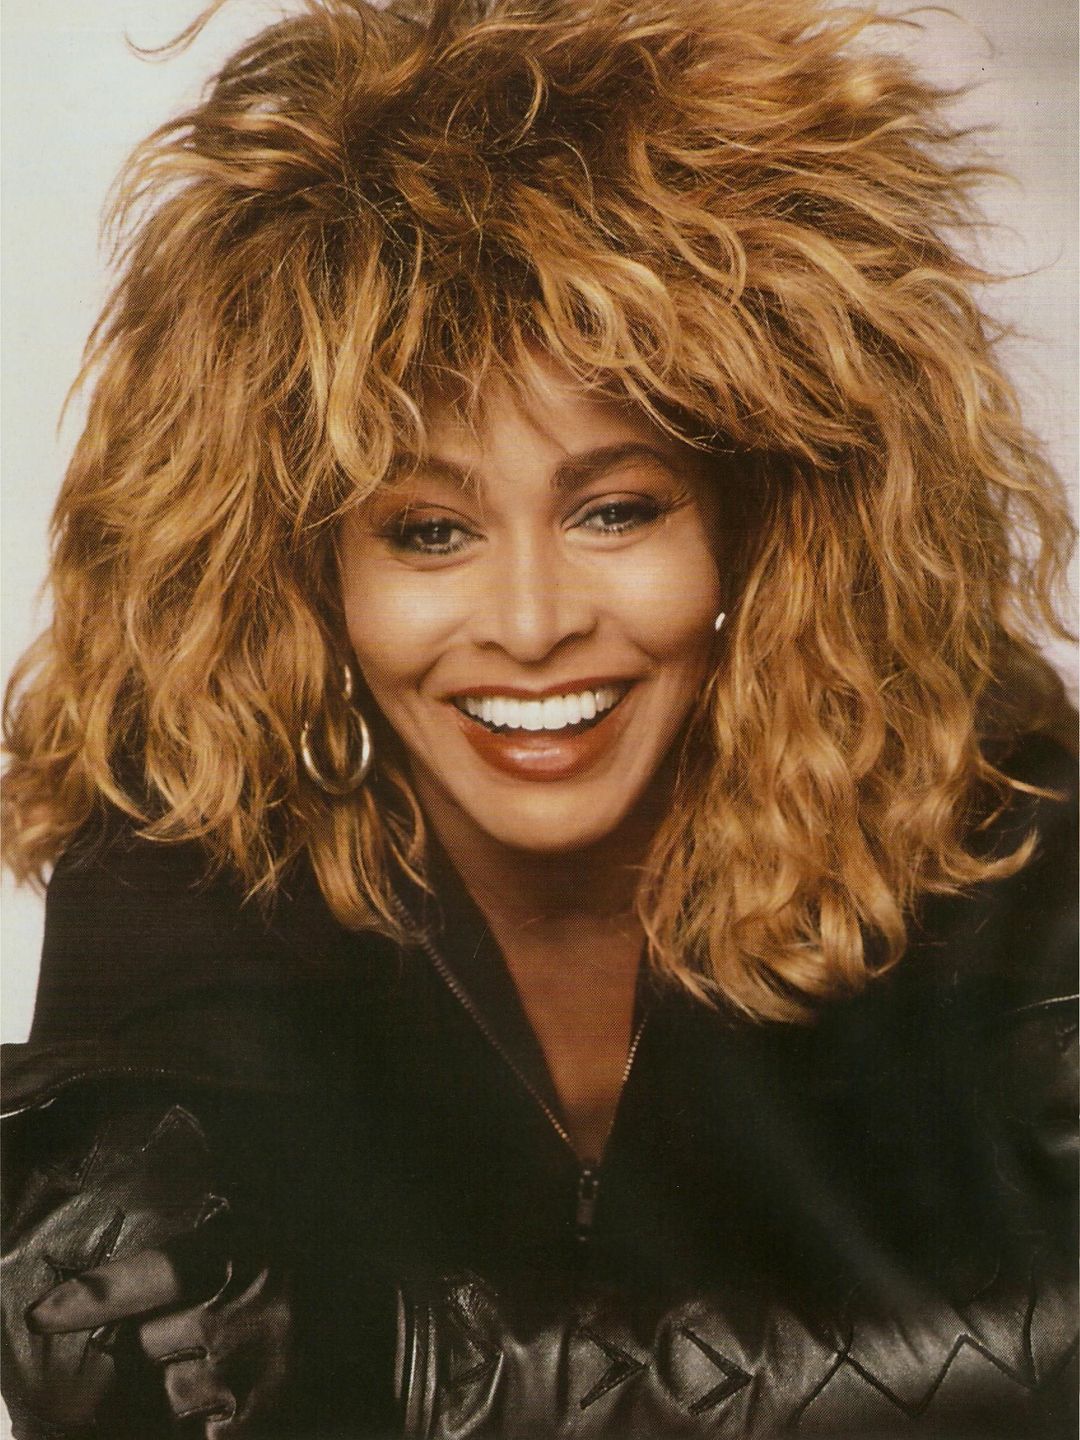 Tina Turner dating history